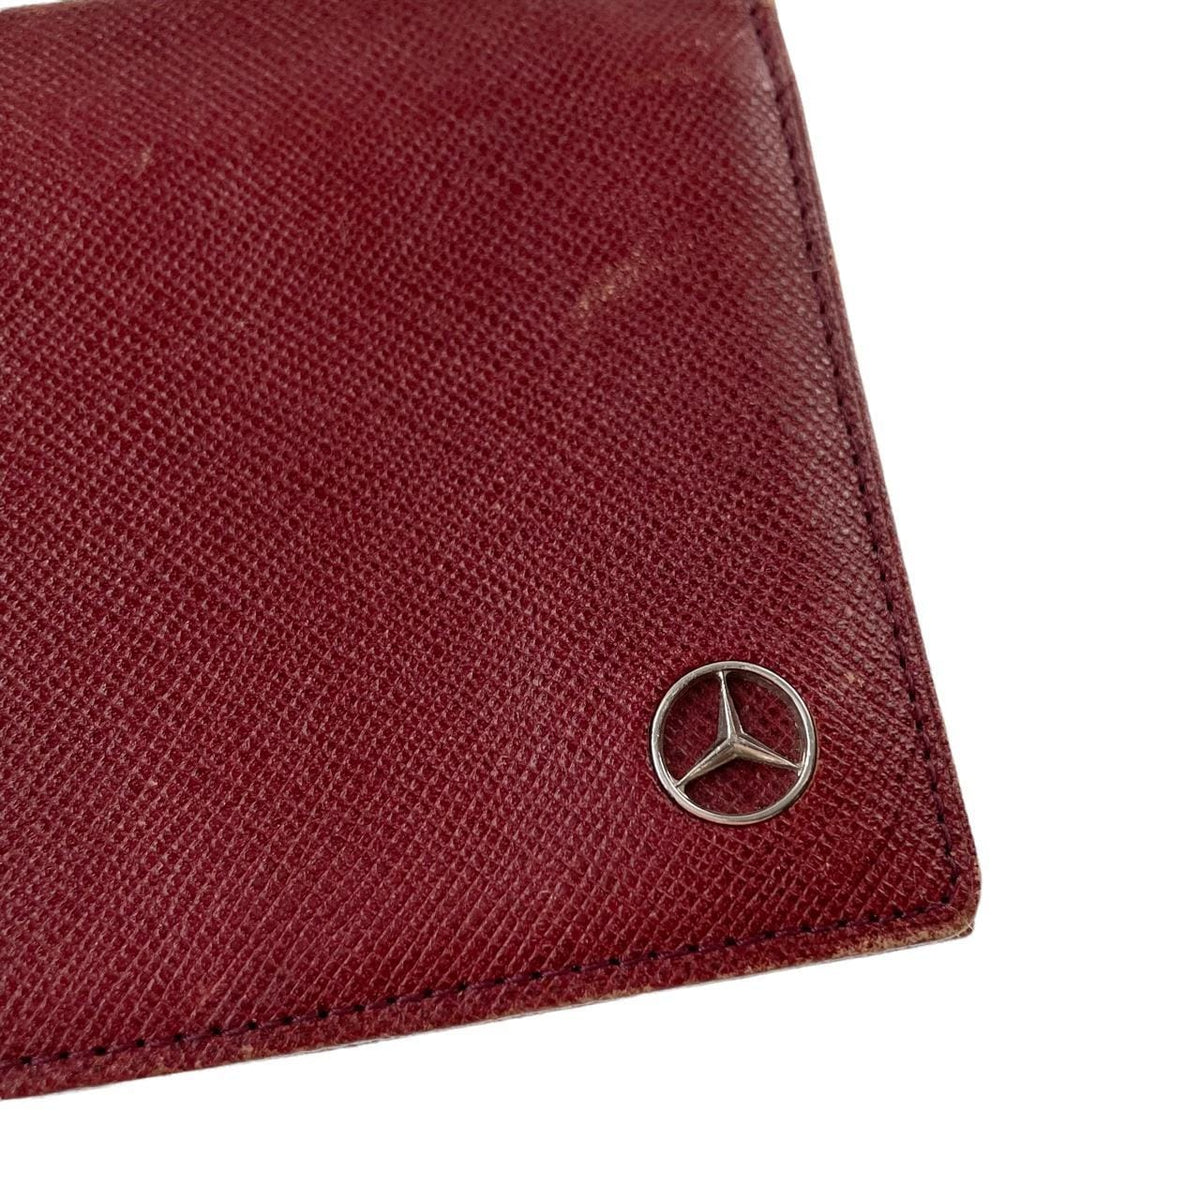 Vintage Mercedes Benz leather wallet purse - second wave vintage store